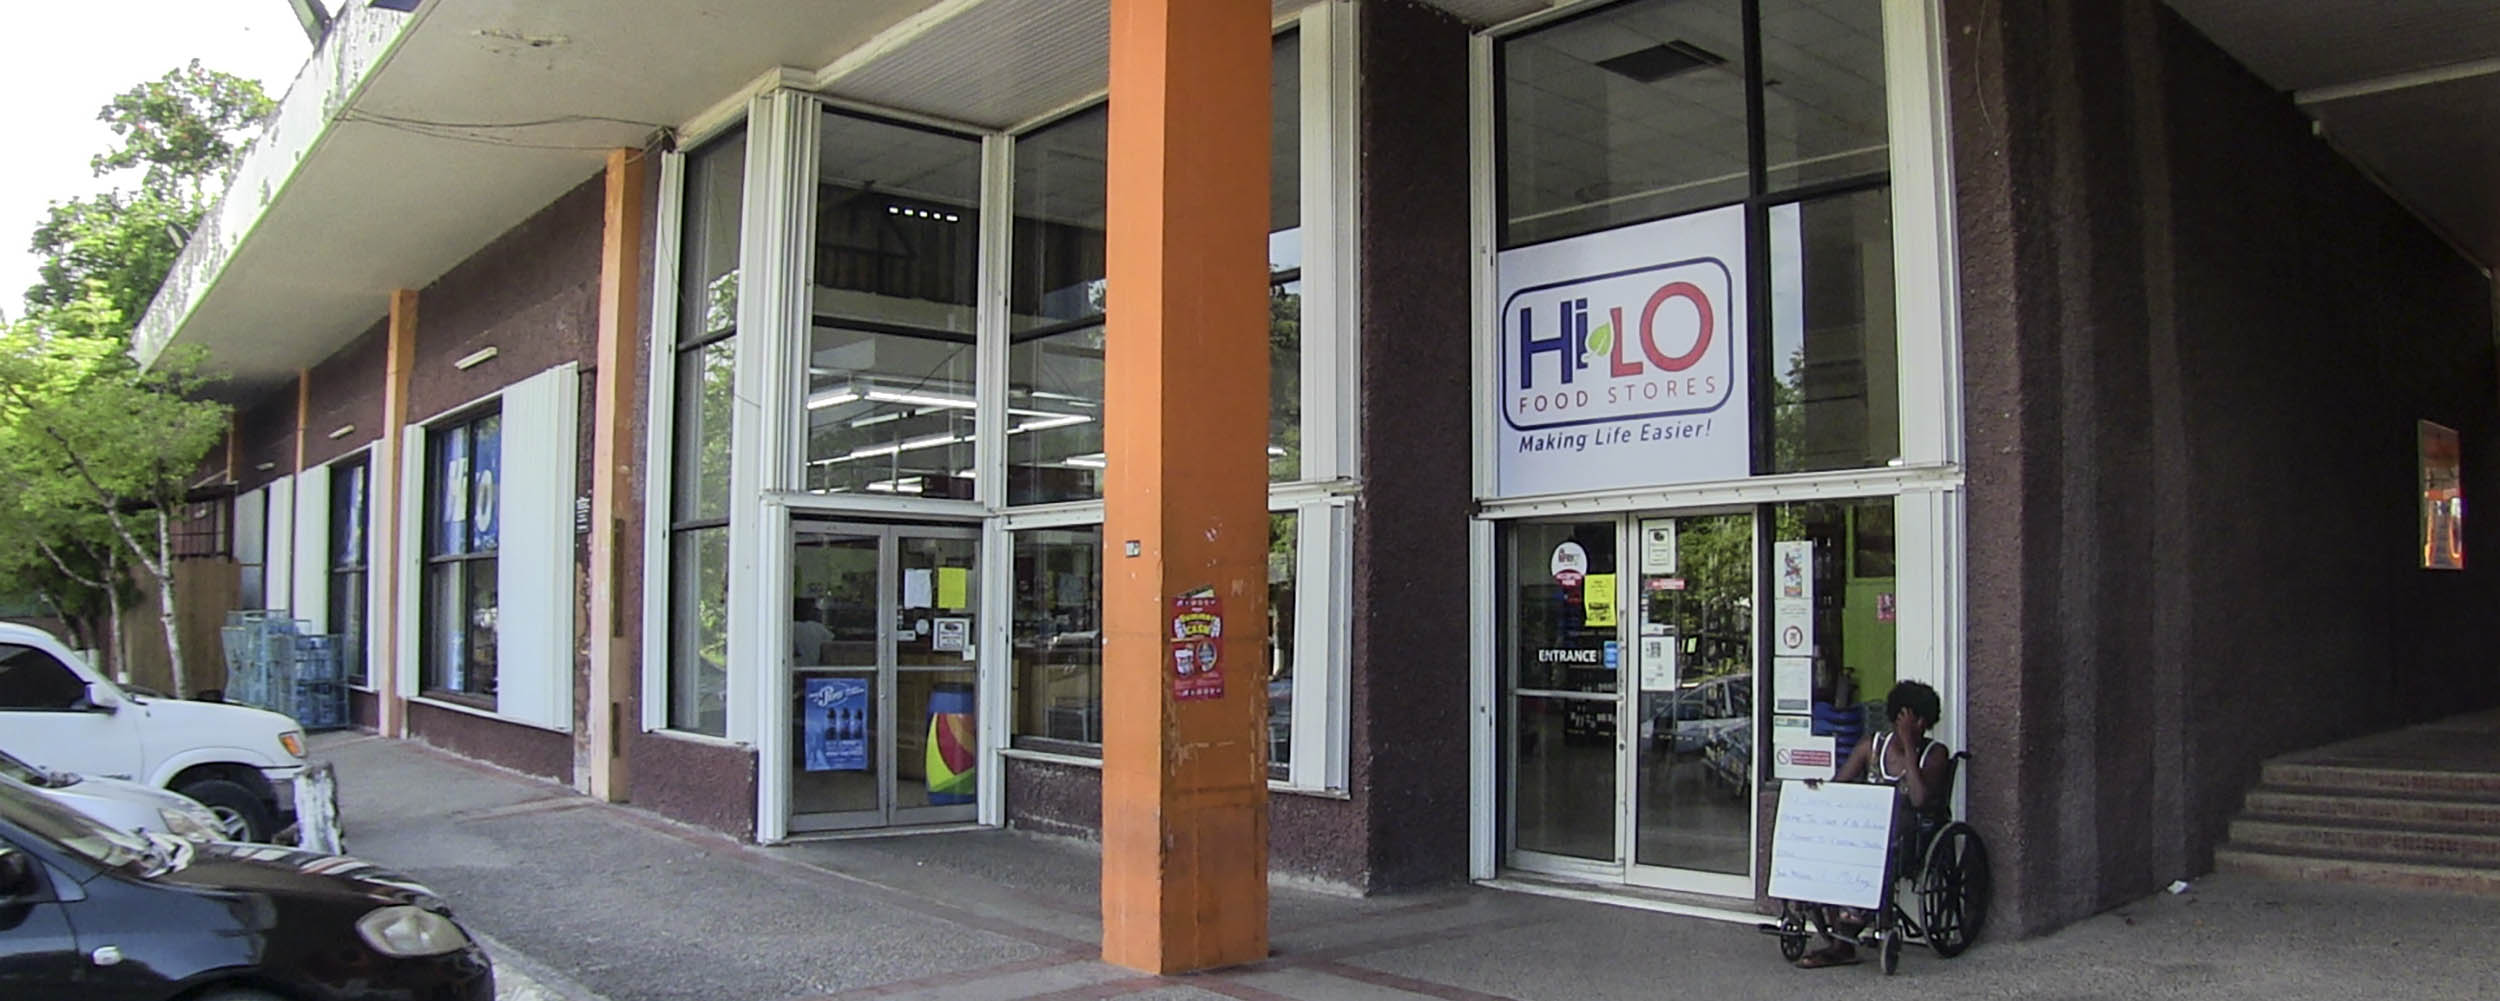 HiLo Supermarket - Sunshine Village Complex - Negril Jamaica